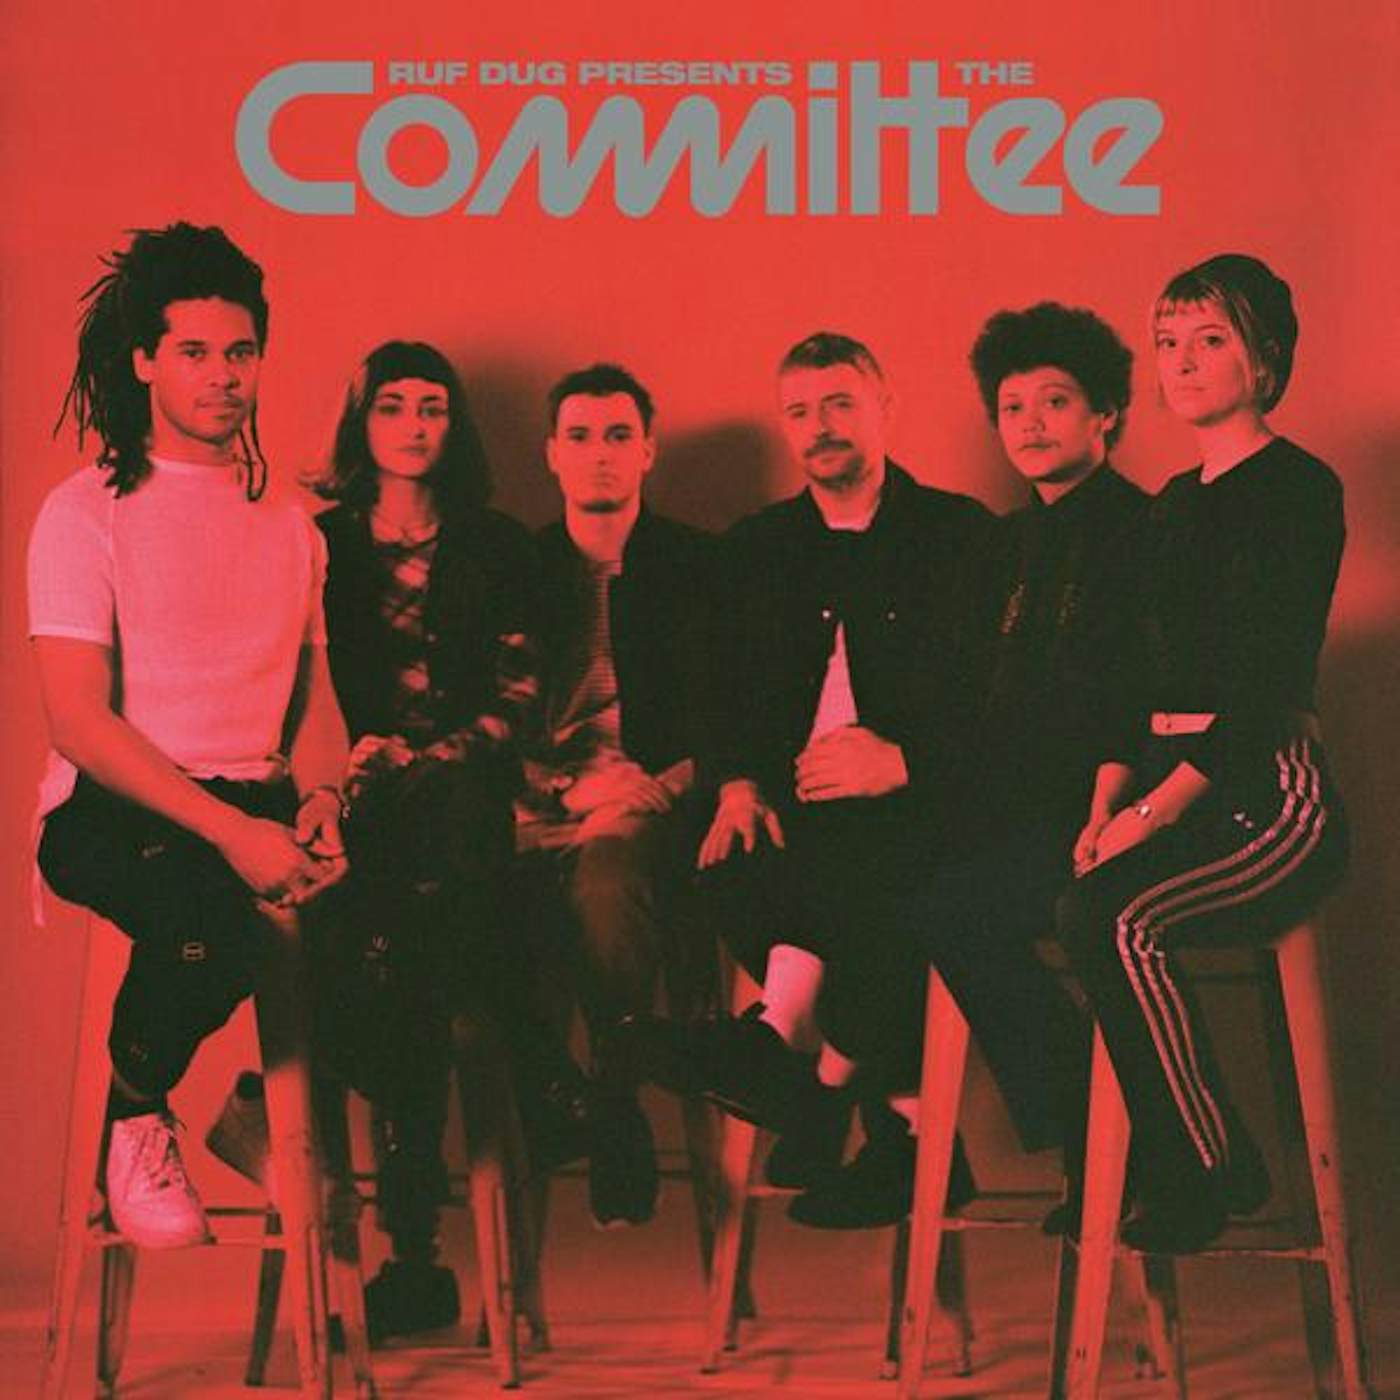 Ruf Dug Presents The Committee Vinyl Record